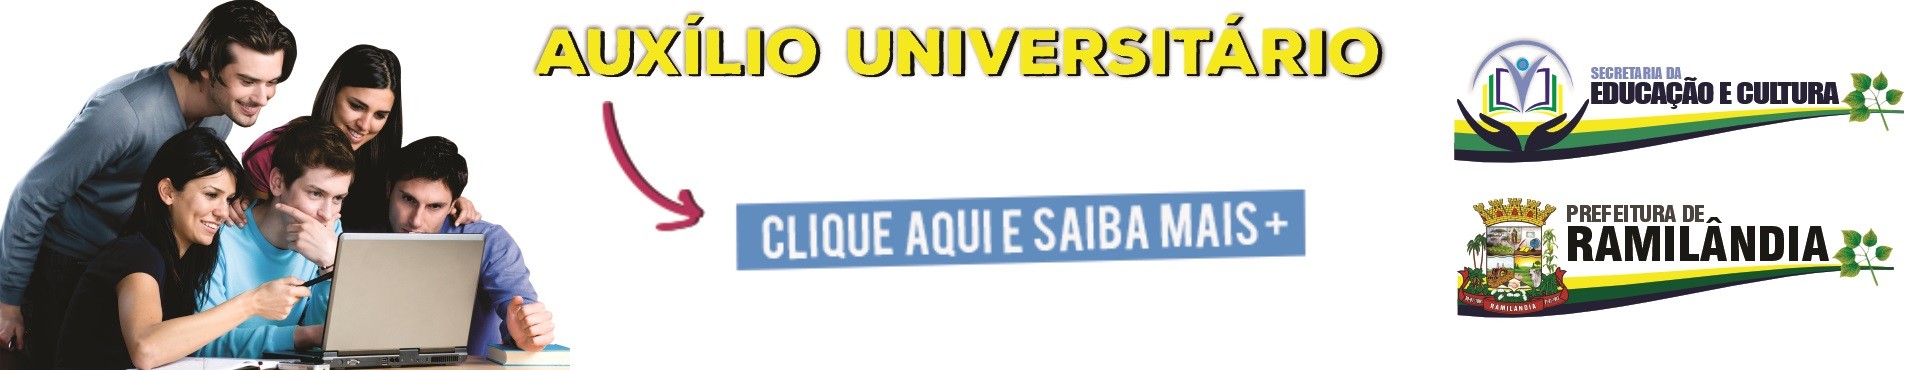 AUXÍLIO UNIVERSITÁRIO